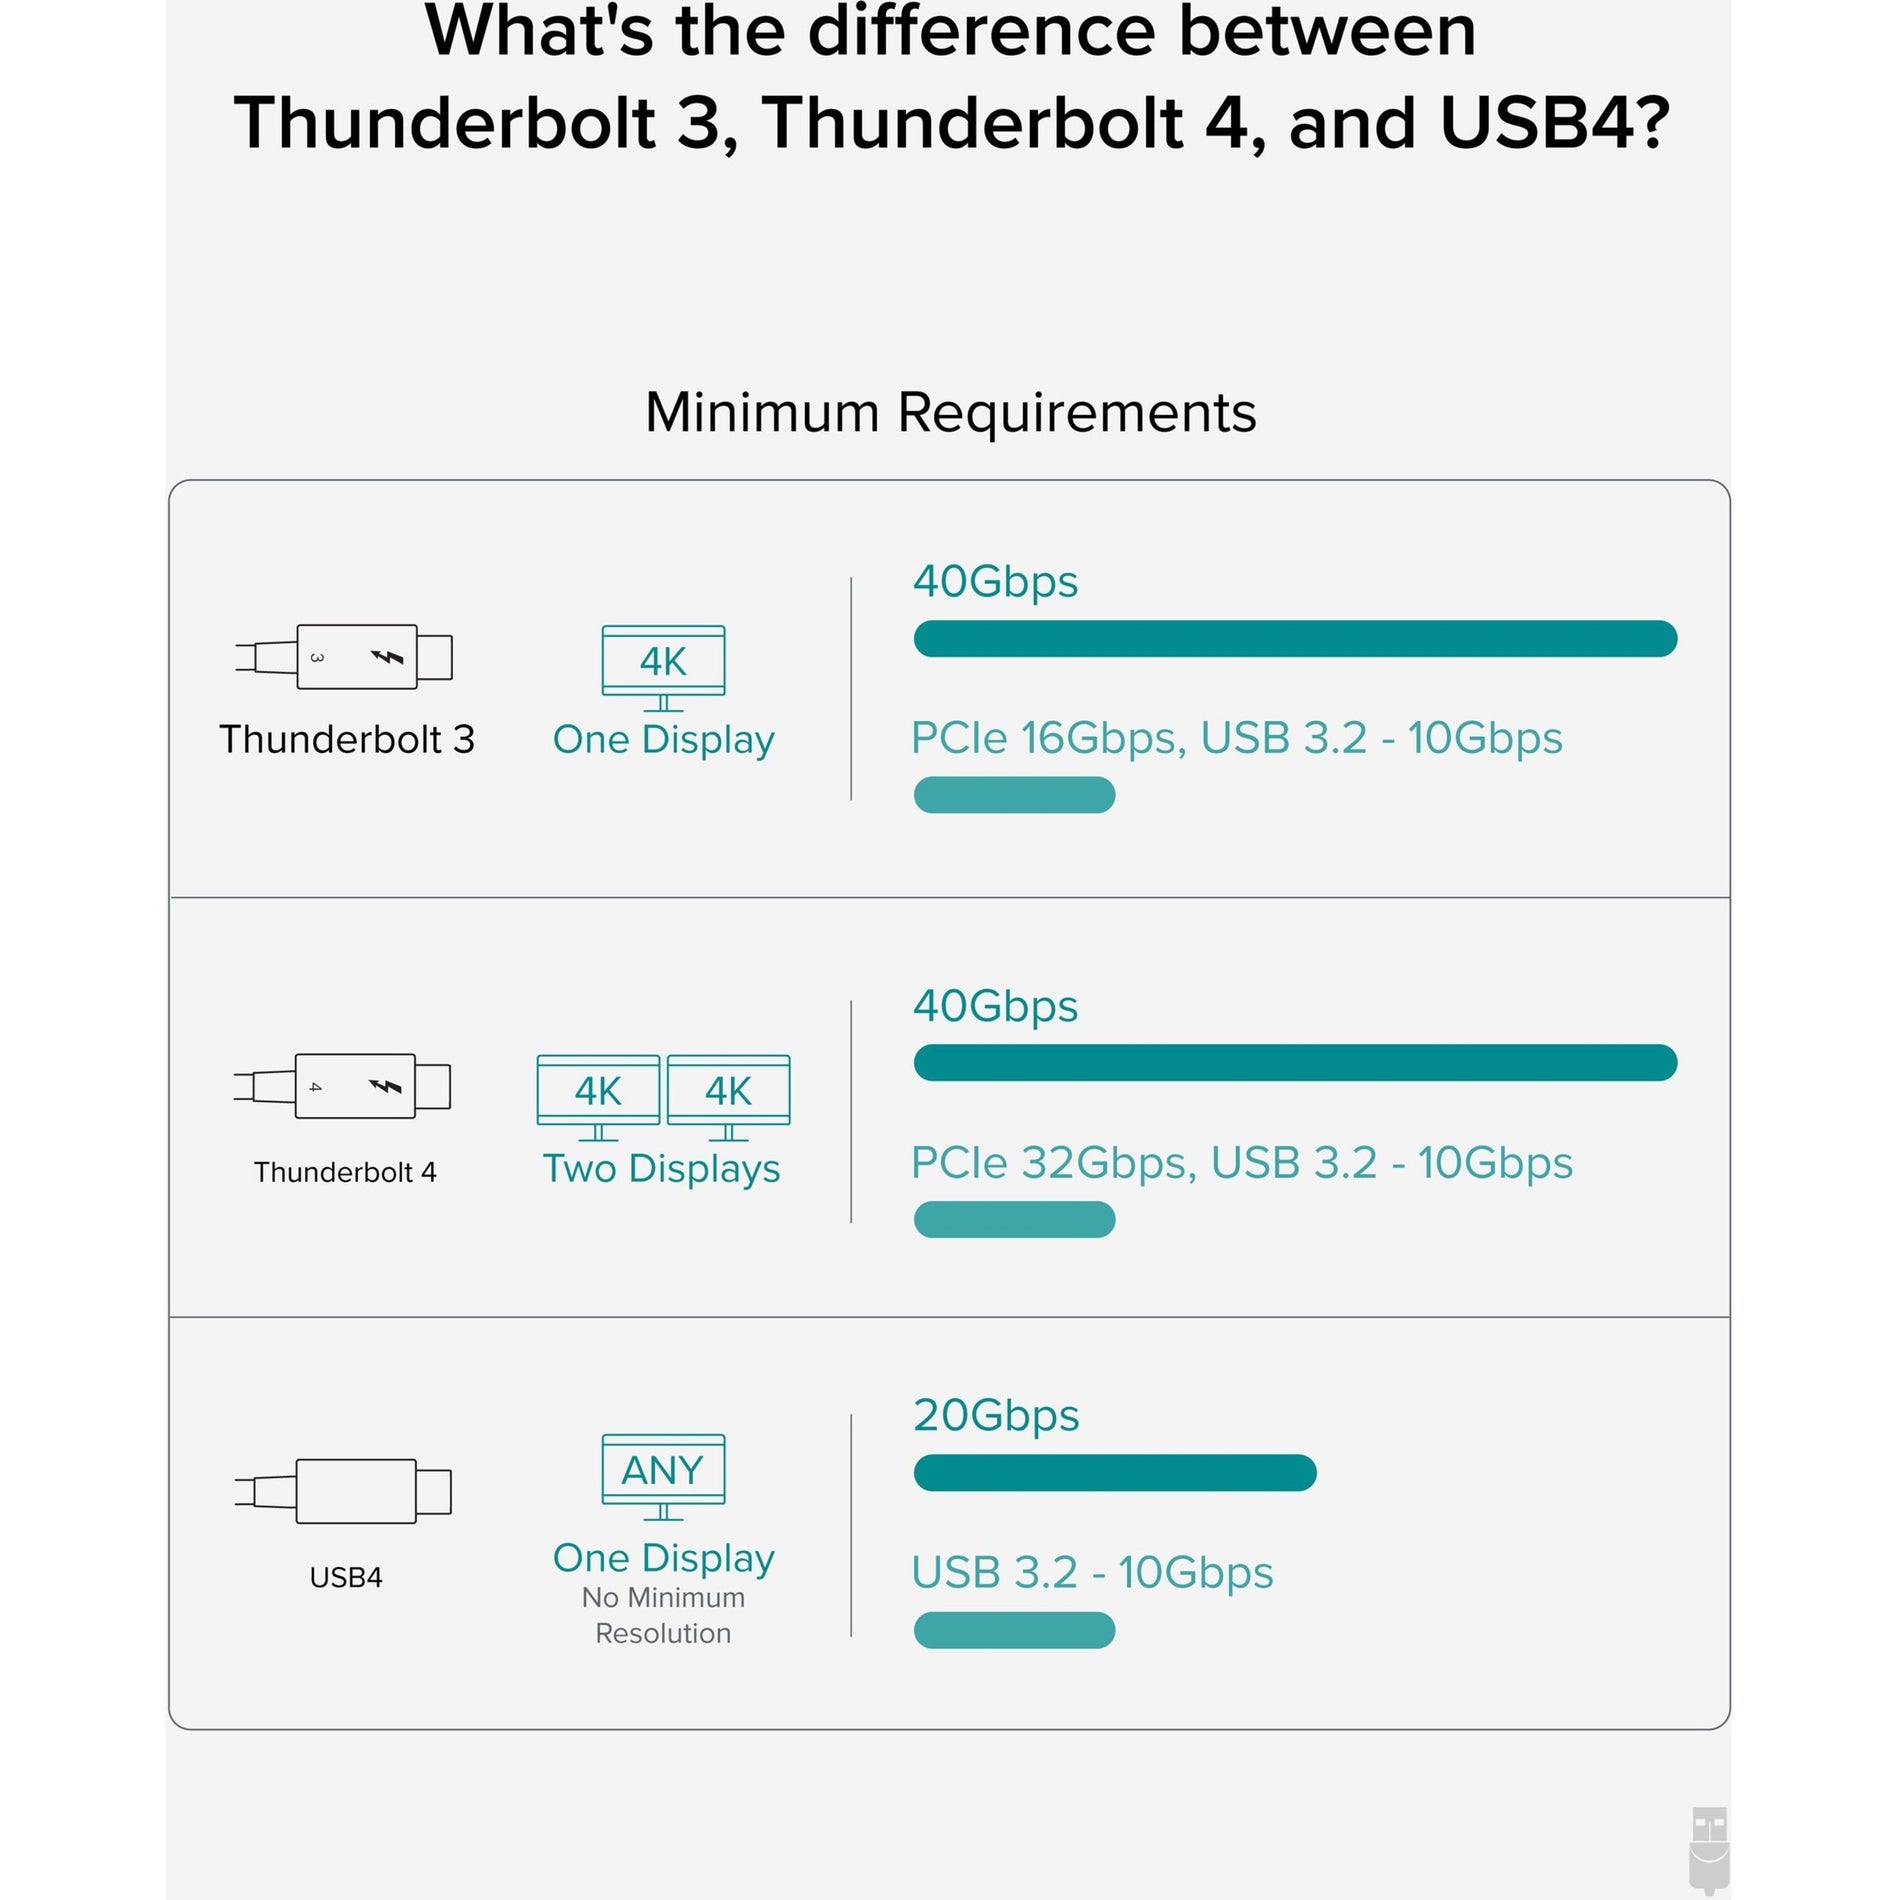 Plugable TBT4-HUB3C 4-Port Thunderbolt 4 Hub, Expand Your Connectivity Effortlessly